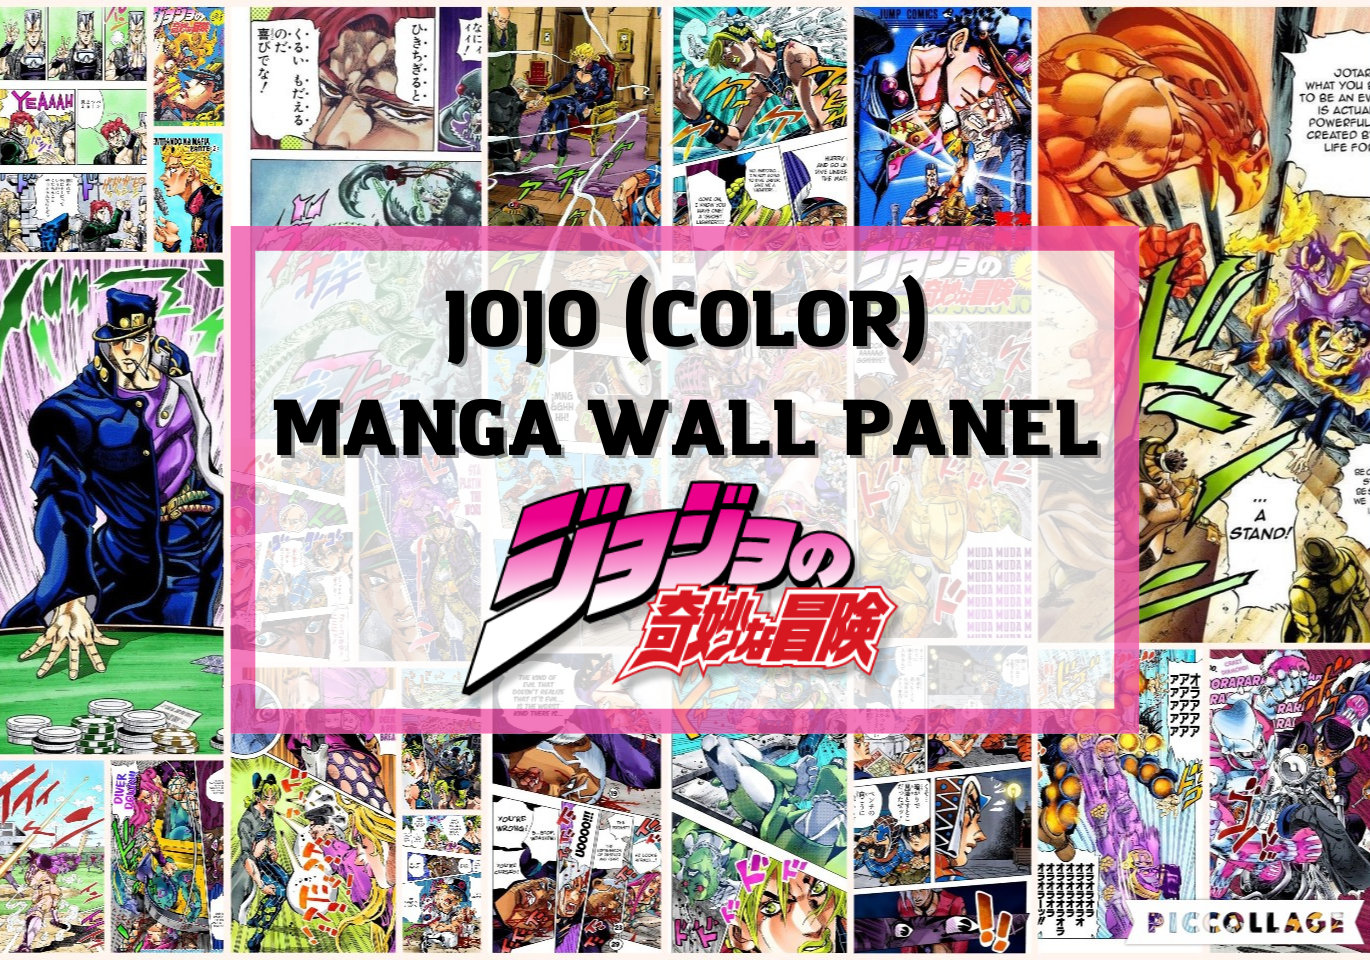 ePanda Anime JoJo Poster, JoJo Adventure Posters Giorno Giovanna Poster Boy  Bedroom Retro Posters Living Room Wall Collage Kit Anime Pictures Decor